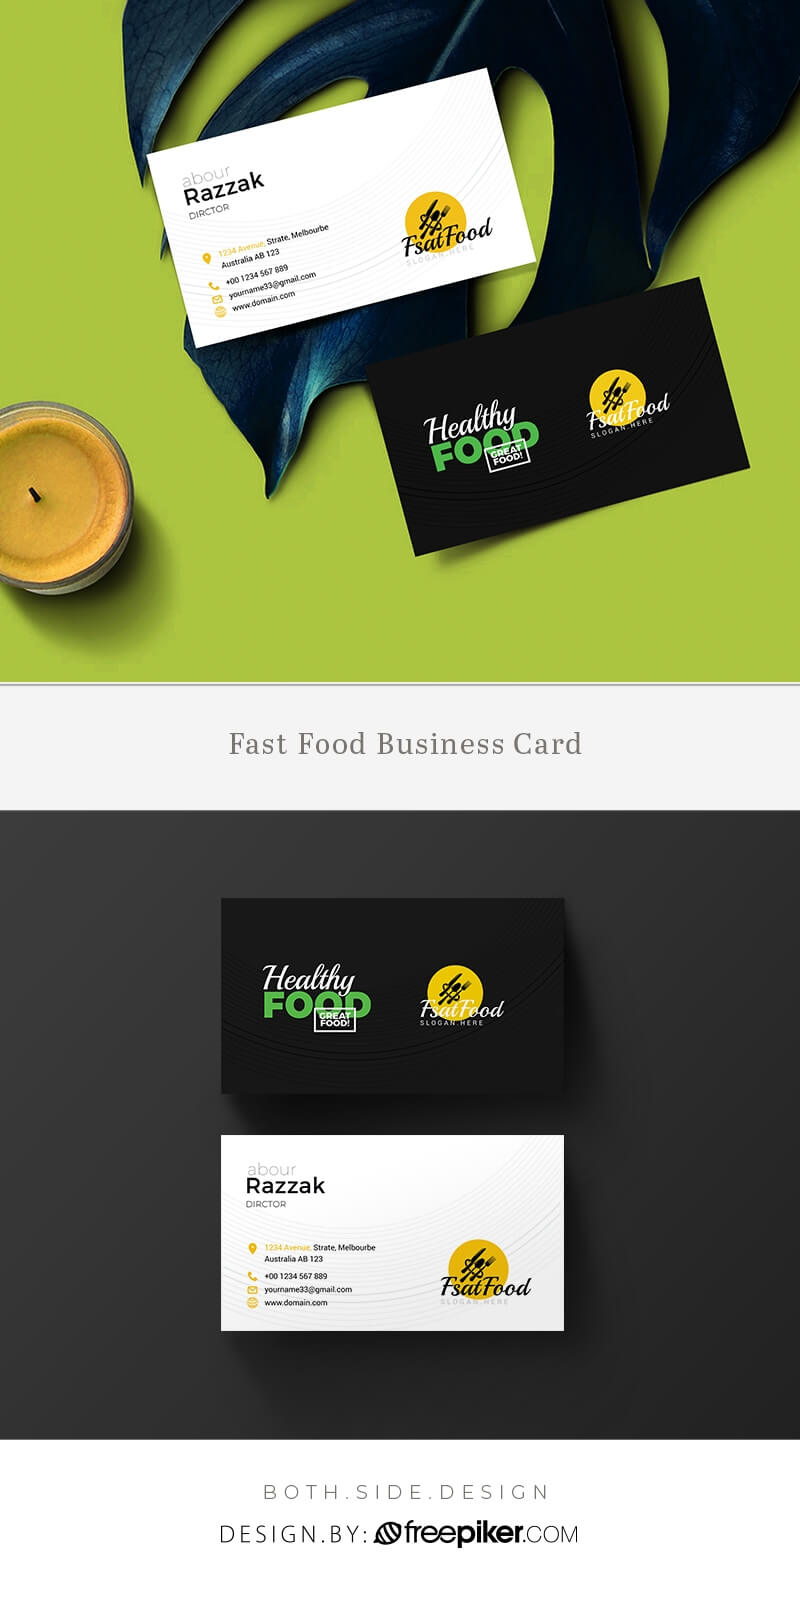 Freepiker | Food And Restaurant Business Card Template With Food Business Cards Templates Free